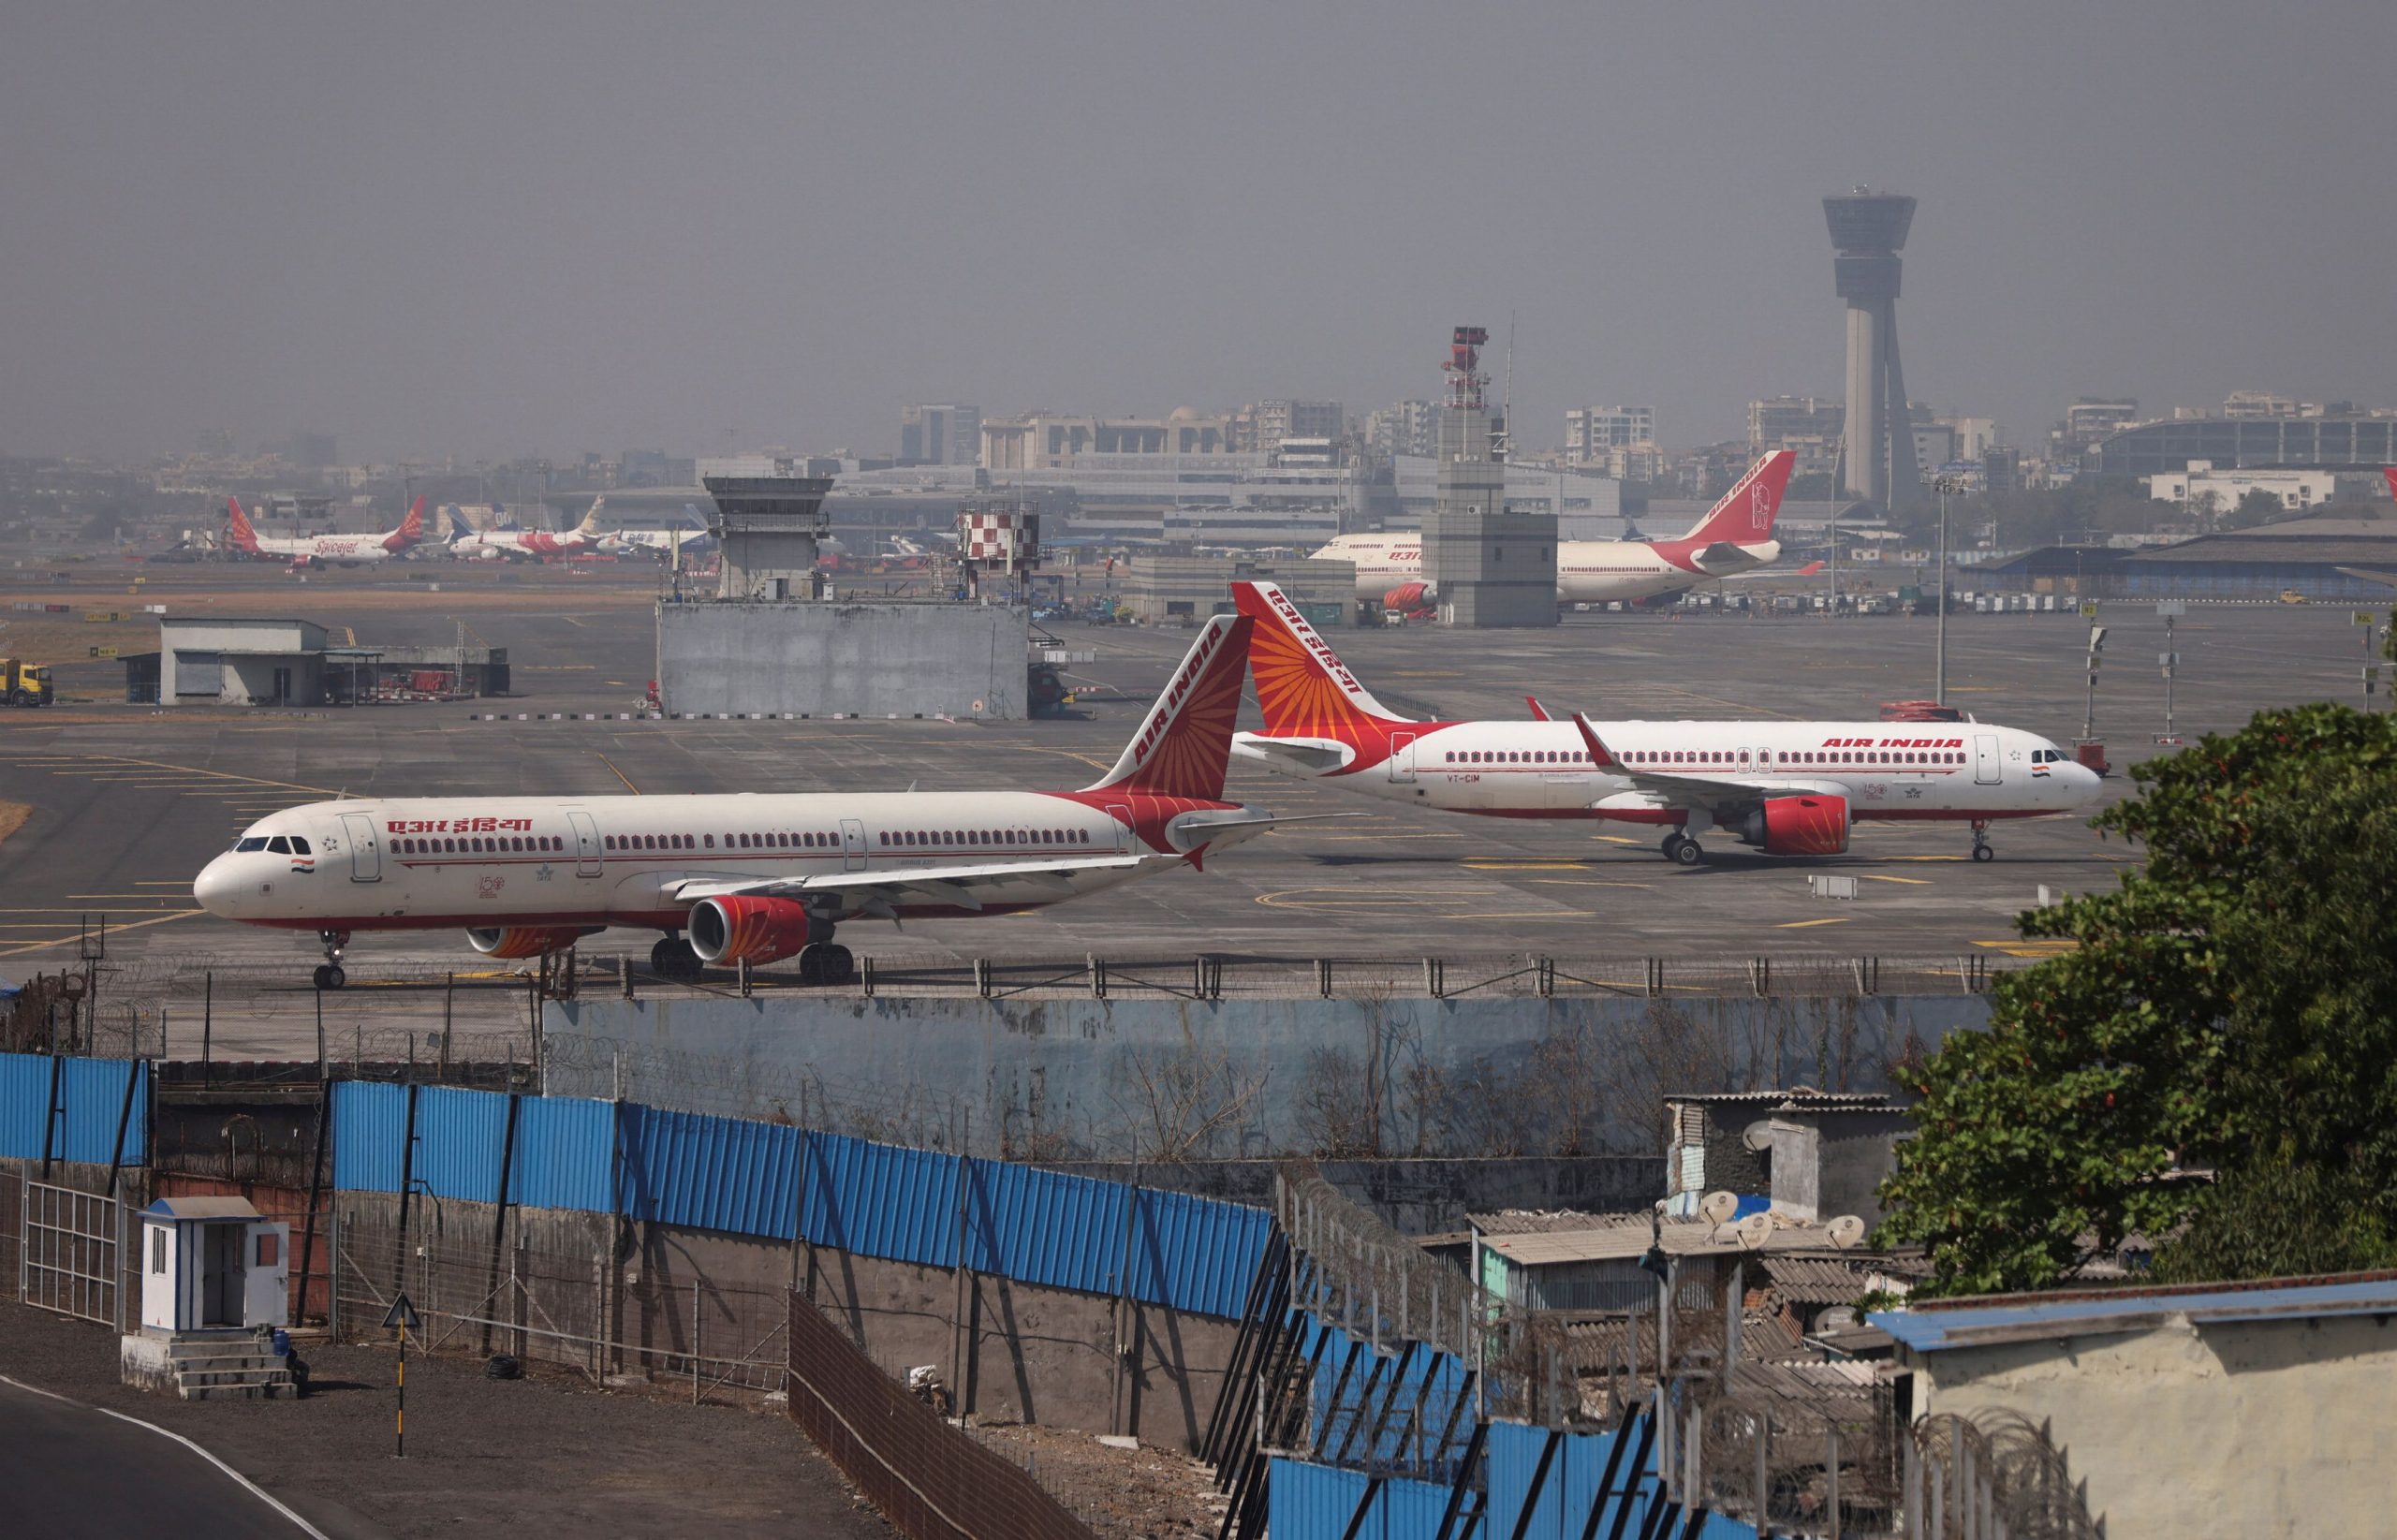 Air India: Μετά την παραγγελία μαμούθ, μπορεί να αγοράσει άλλα 370 αεροπλάνα